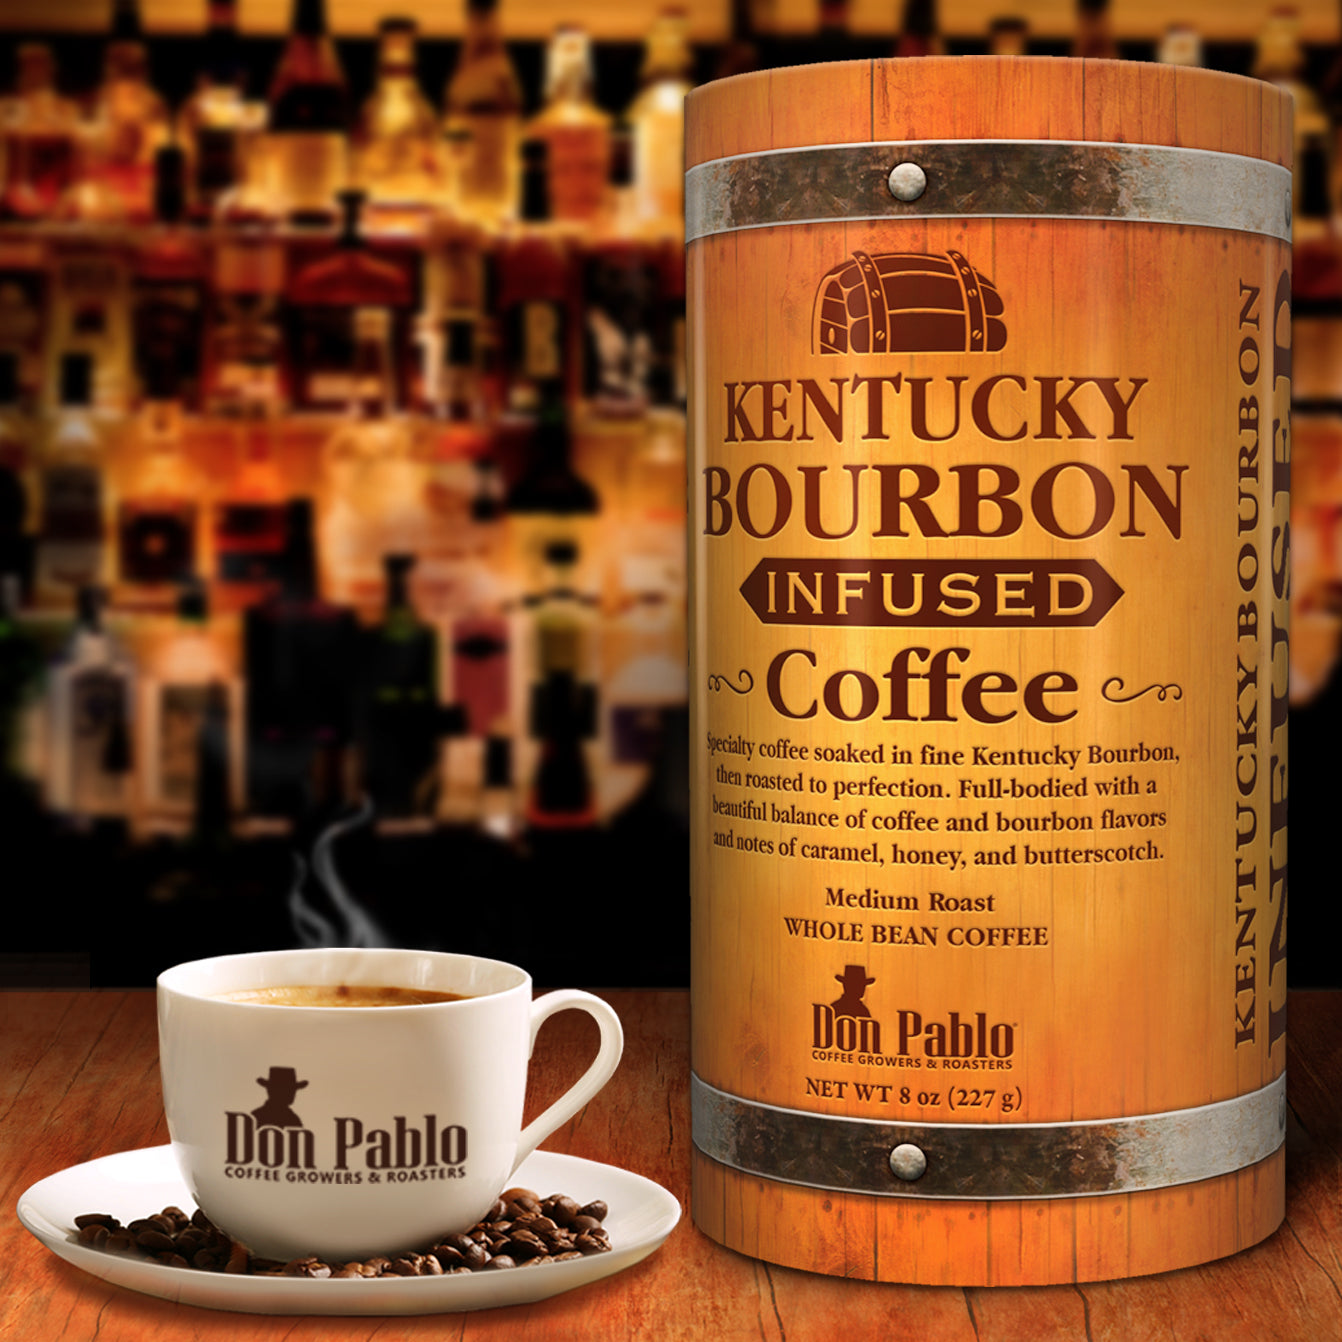 8 oz Don Pablo Kentucky Bourbon Infused Coffee hide